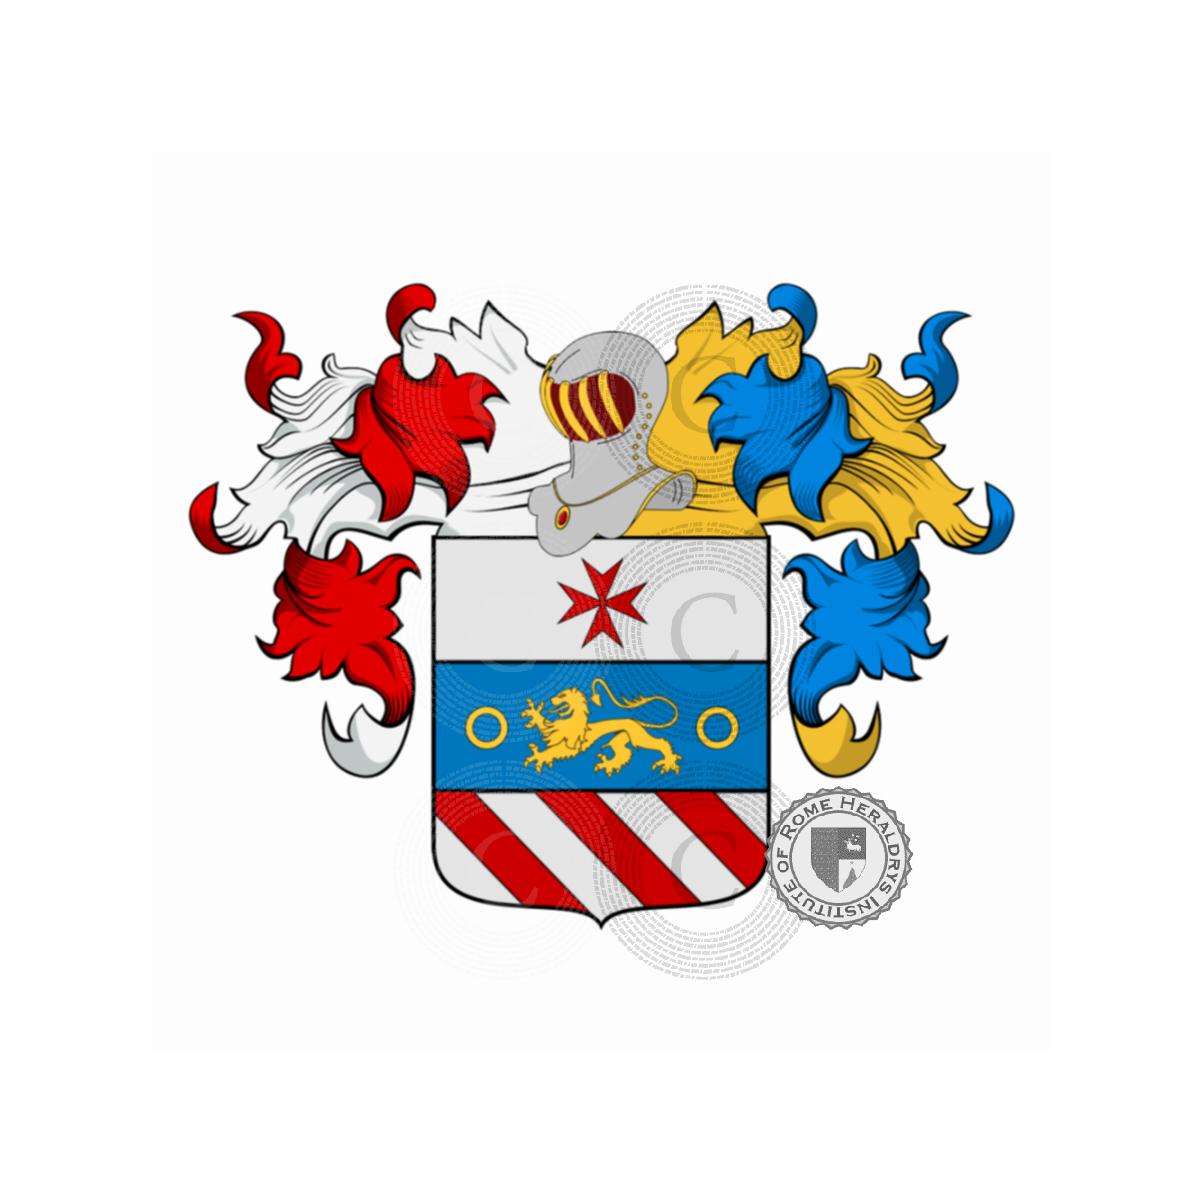 Coat of arms of familyMaggi, Maddi,Madius,Maggi-Via,Magi